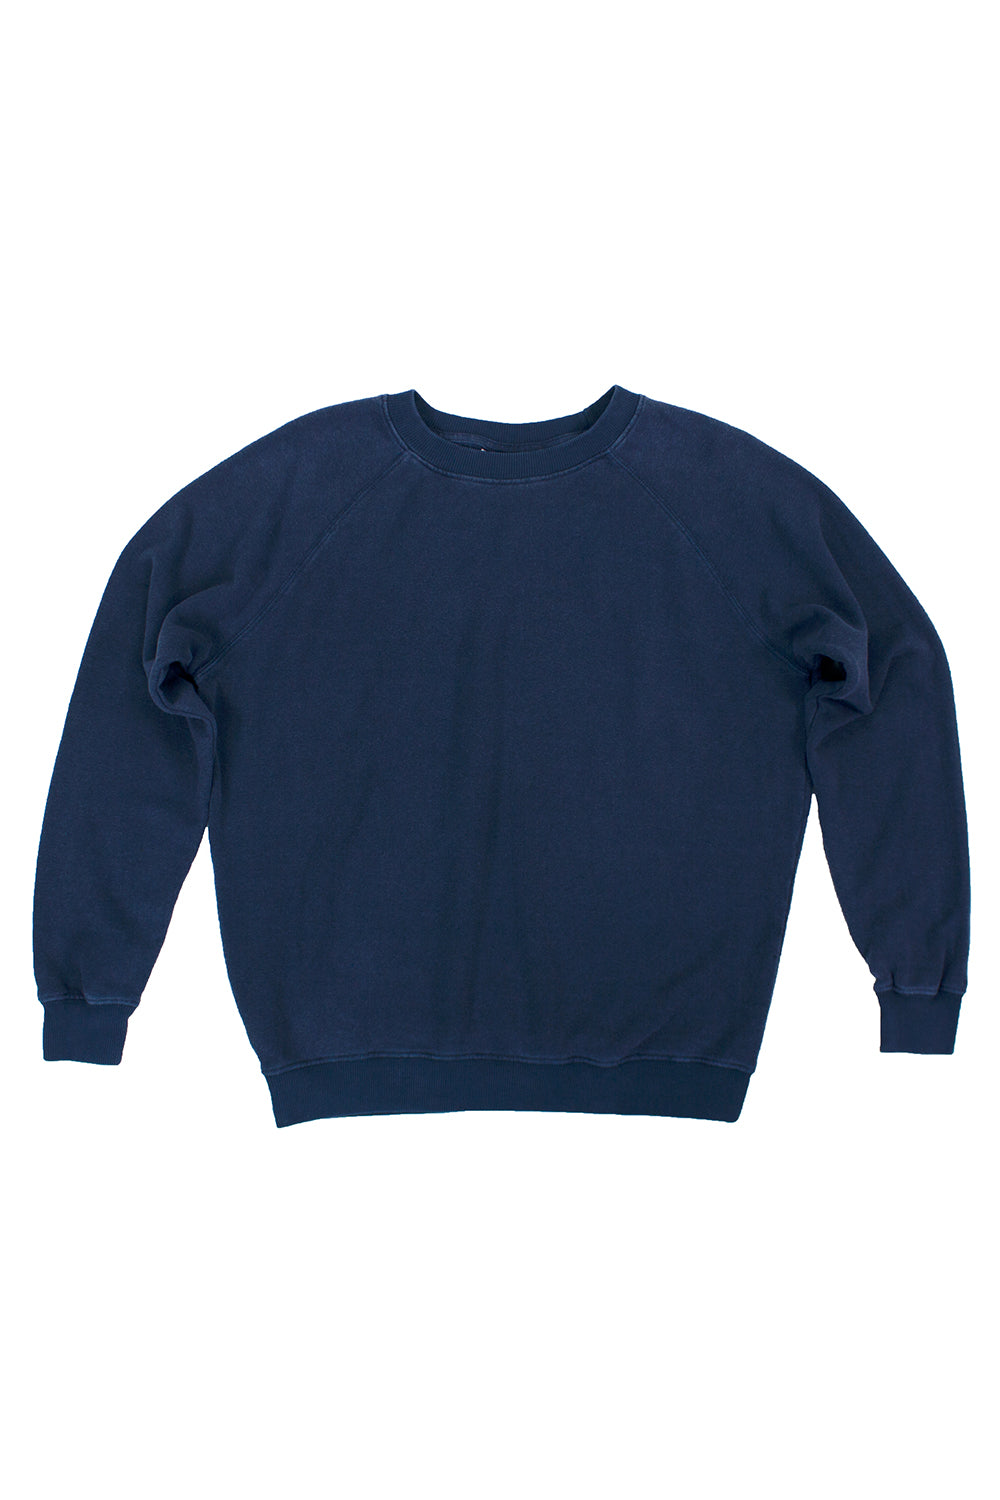 Bonfire Raglan Sweatshirt | Jungmaven Hemp Clothing & Accessories / Color: Navy